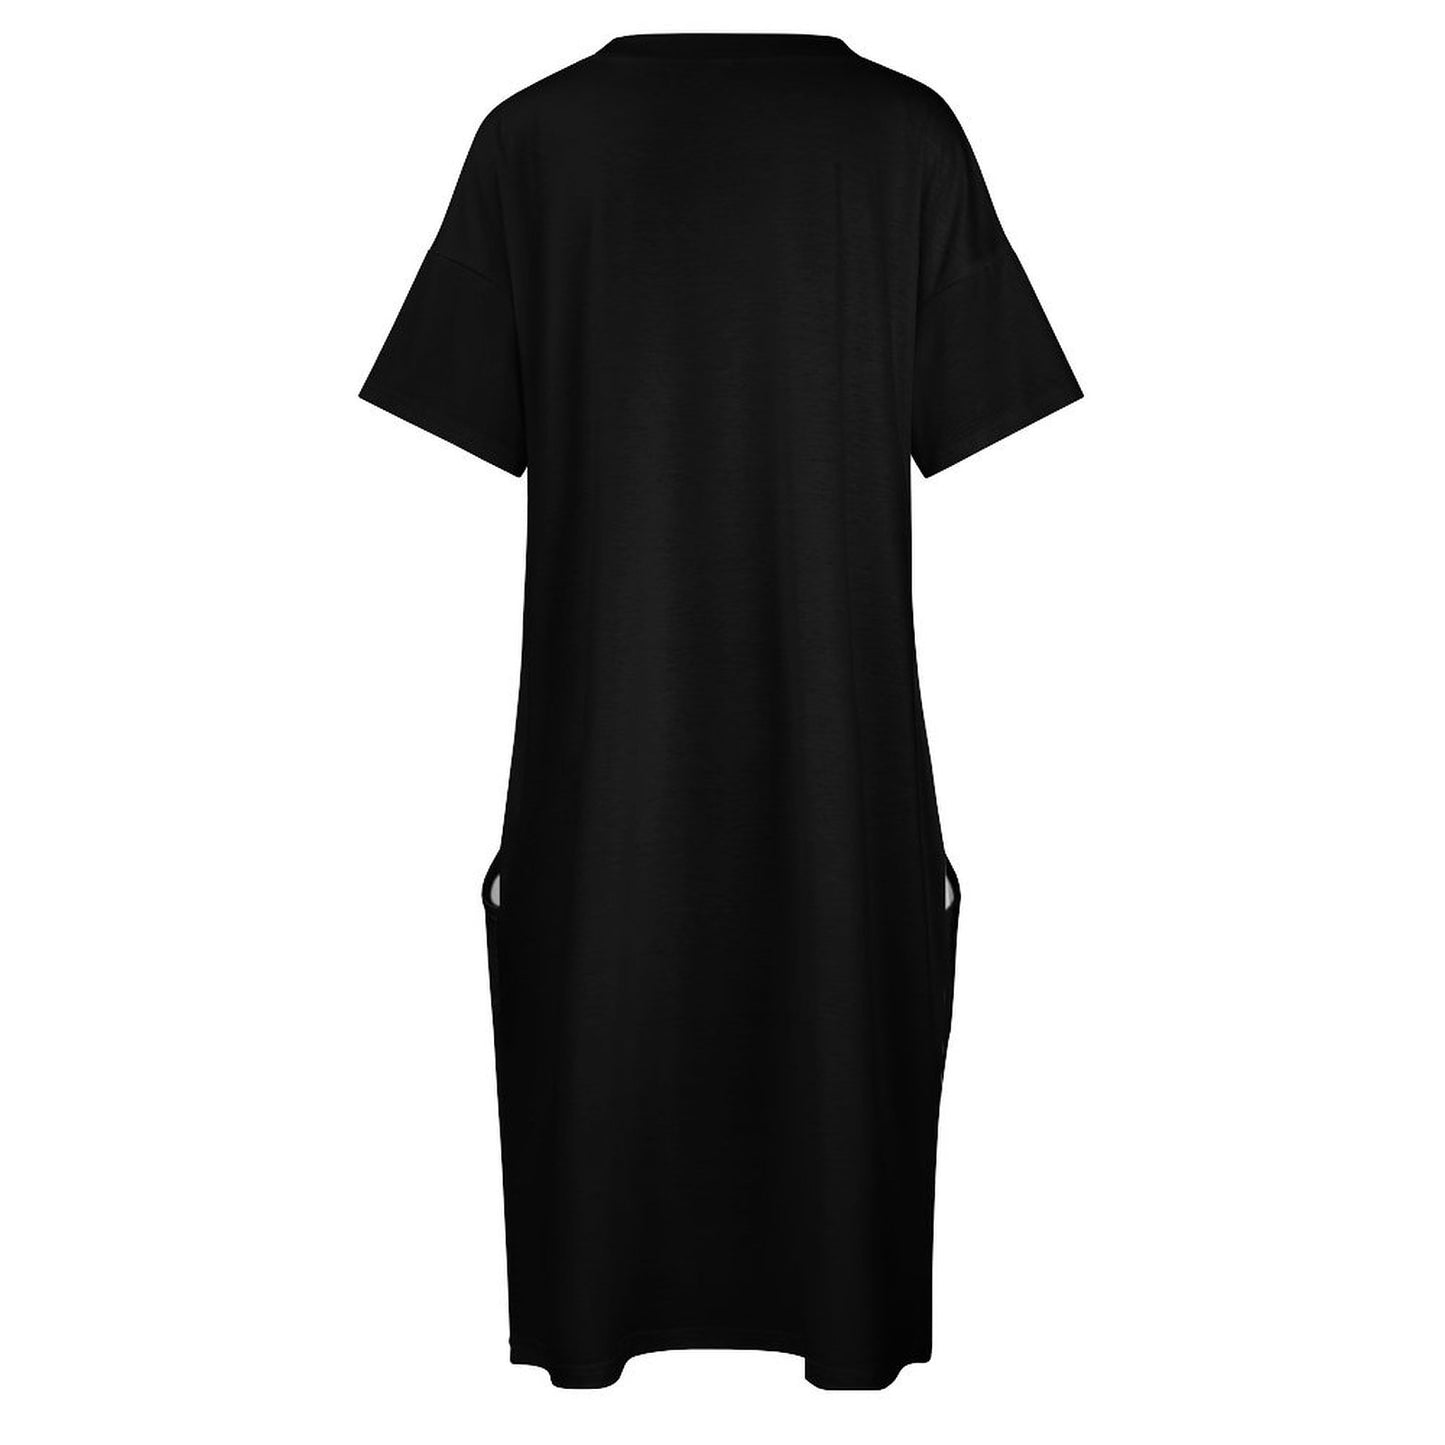 Black V-Neck Dress With Pockets